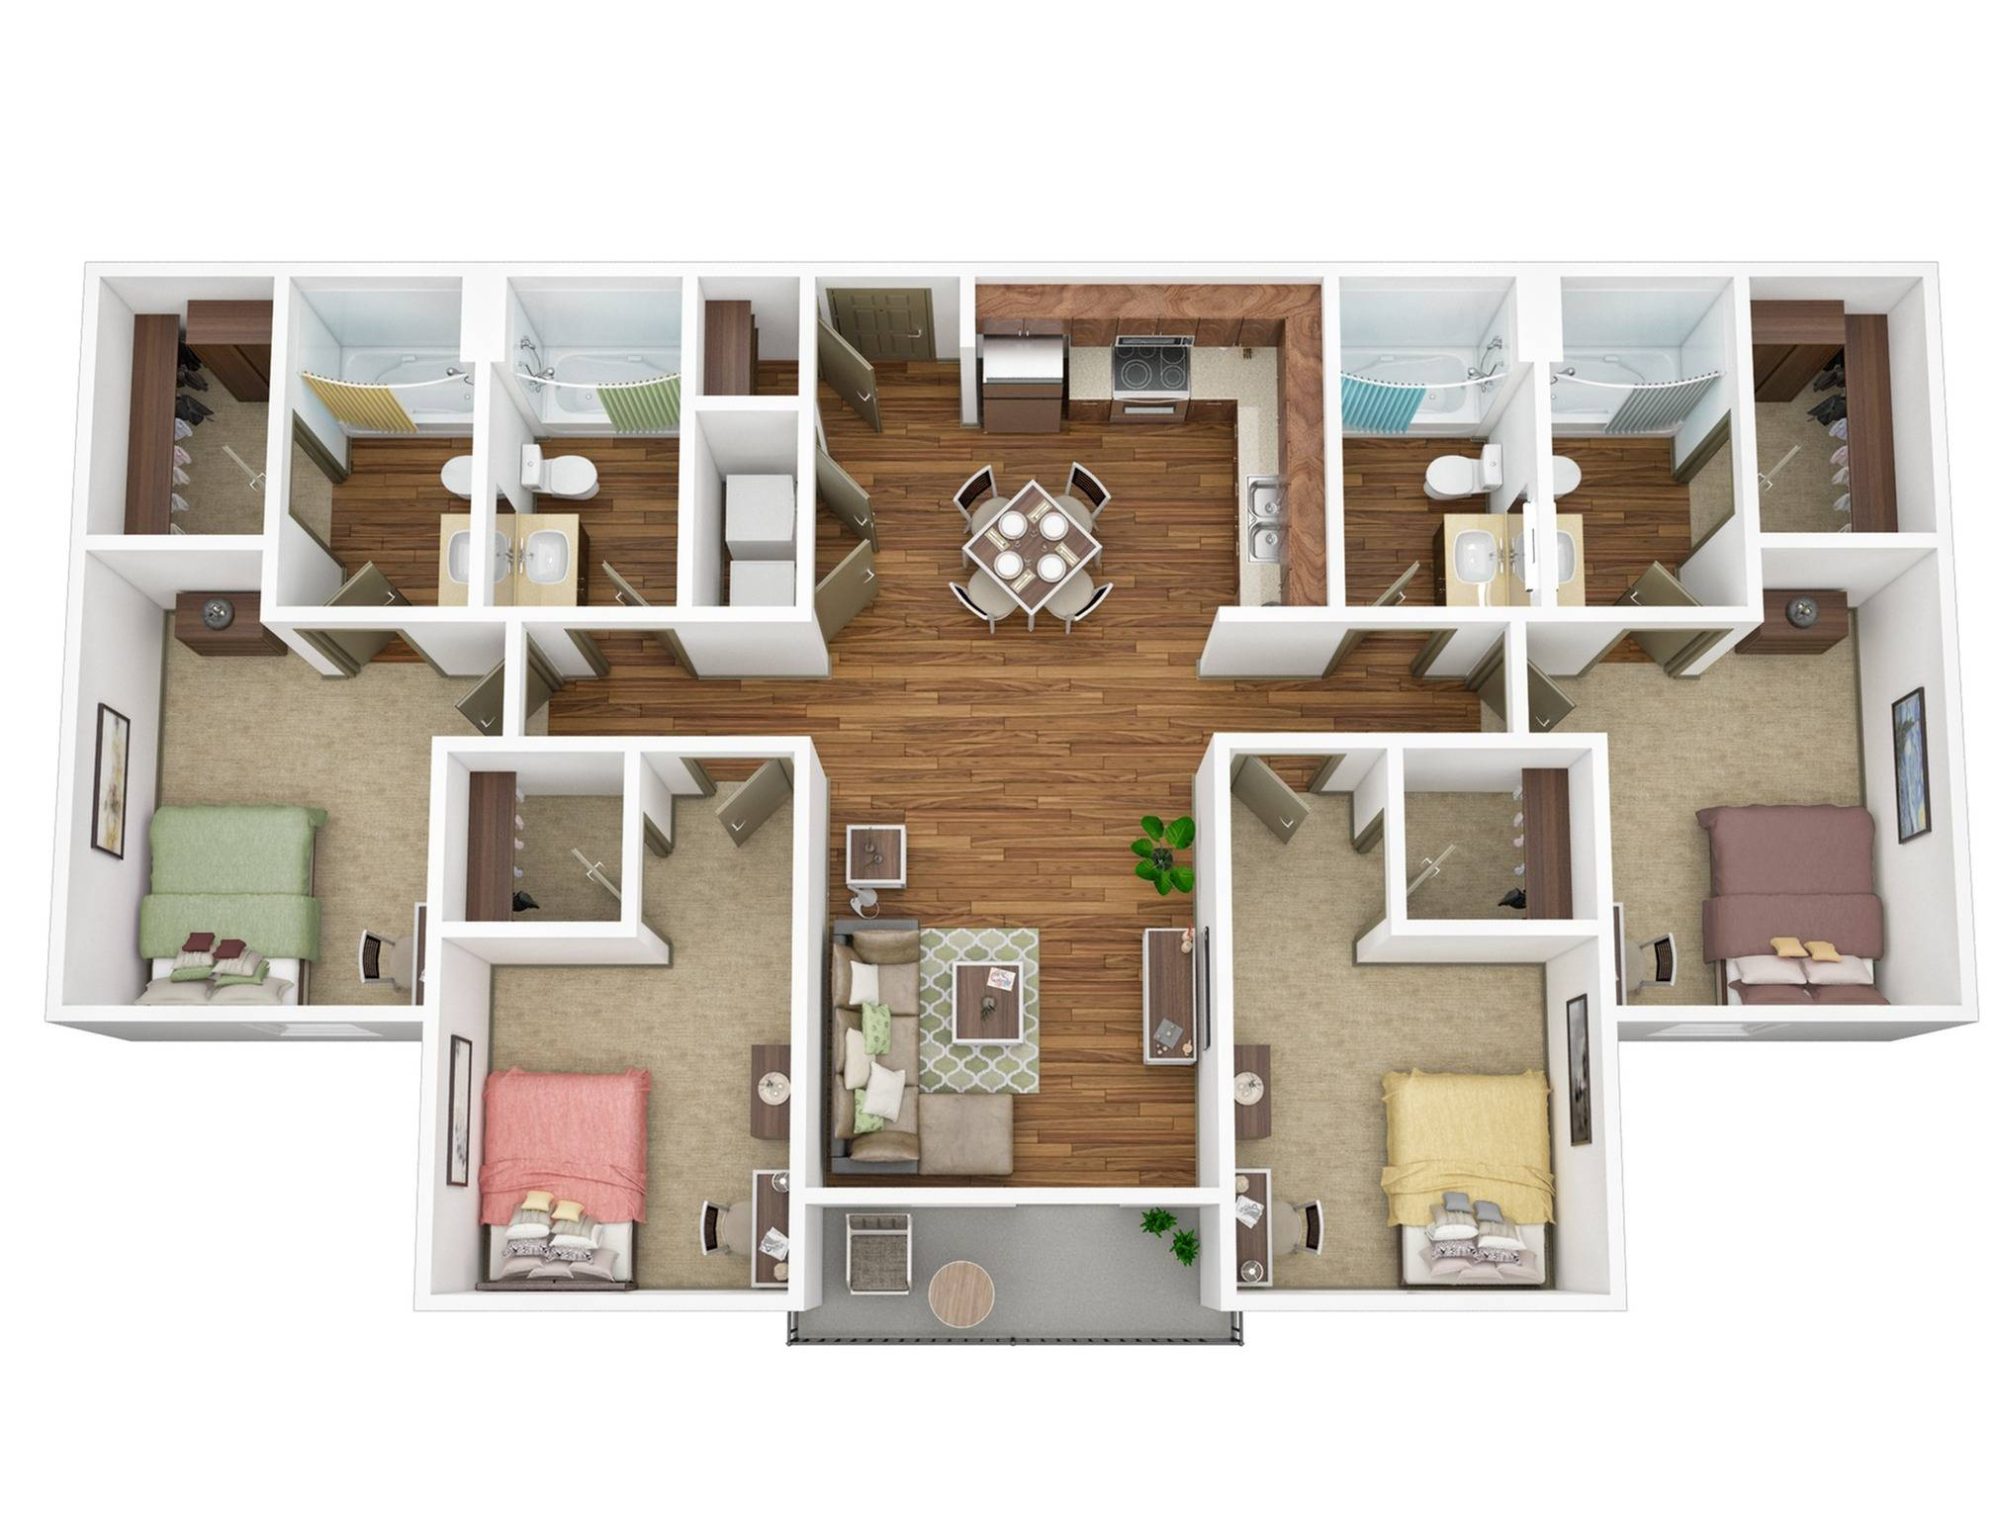 A 3D image of the 4BR/4BA – Platinum floorplan, a 1472 squarefoot, 4 bed / 4 bath unit